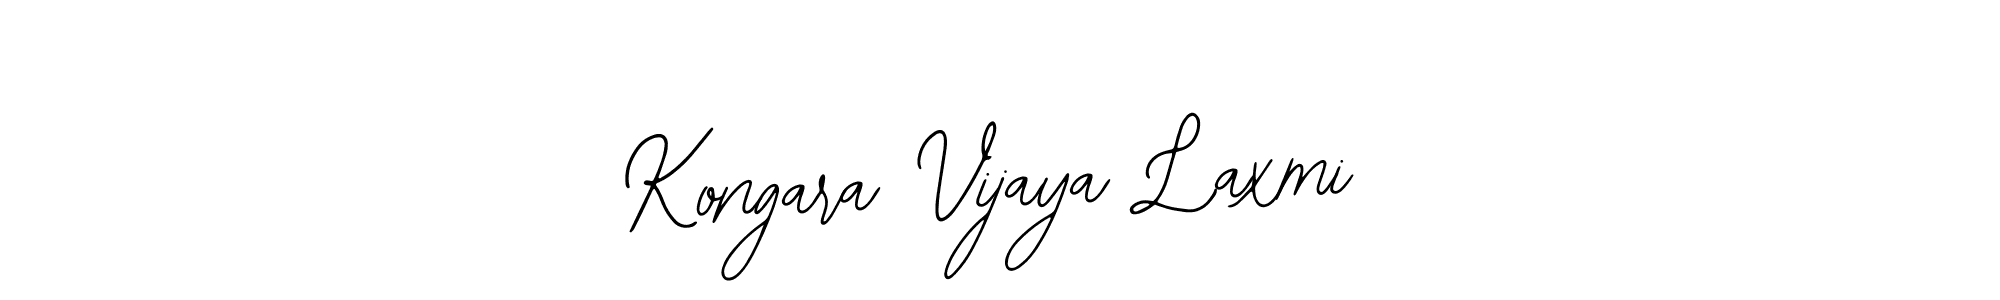 How to Draw Kongara Vijaya Laxmi signature style? Bearetta-2O07w is a latest design signature styles for name Kongara Vijaya Laxmi. Kongara Vijaya Laxmi signature style 12 images and pictures png